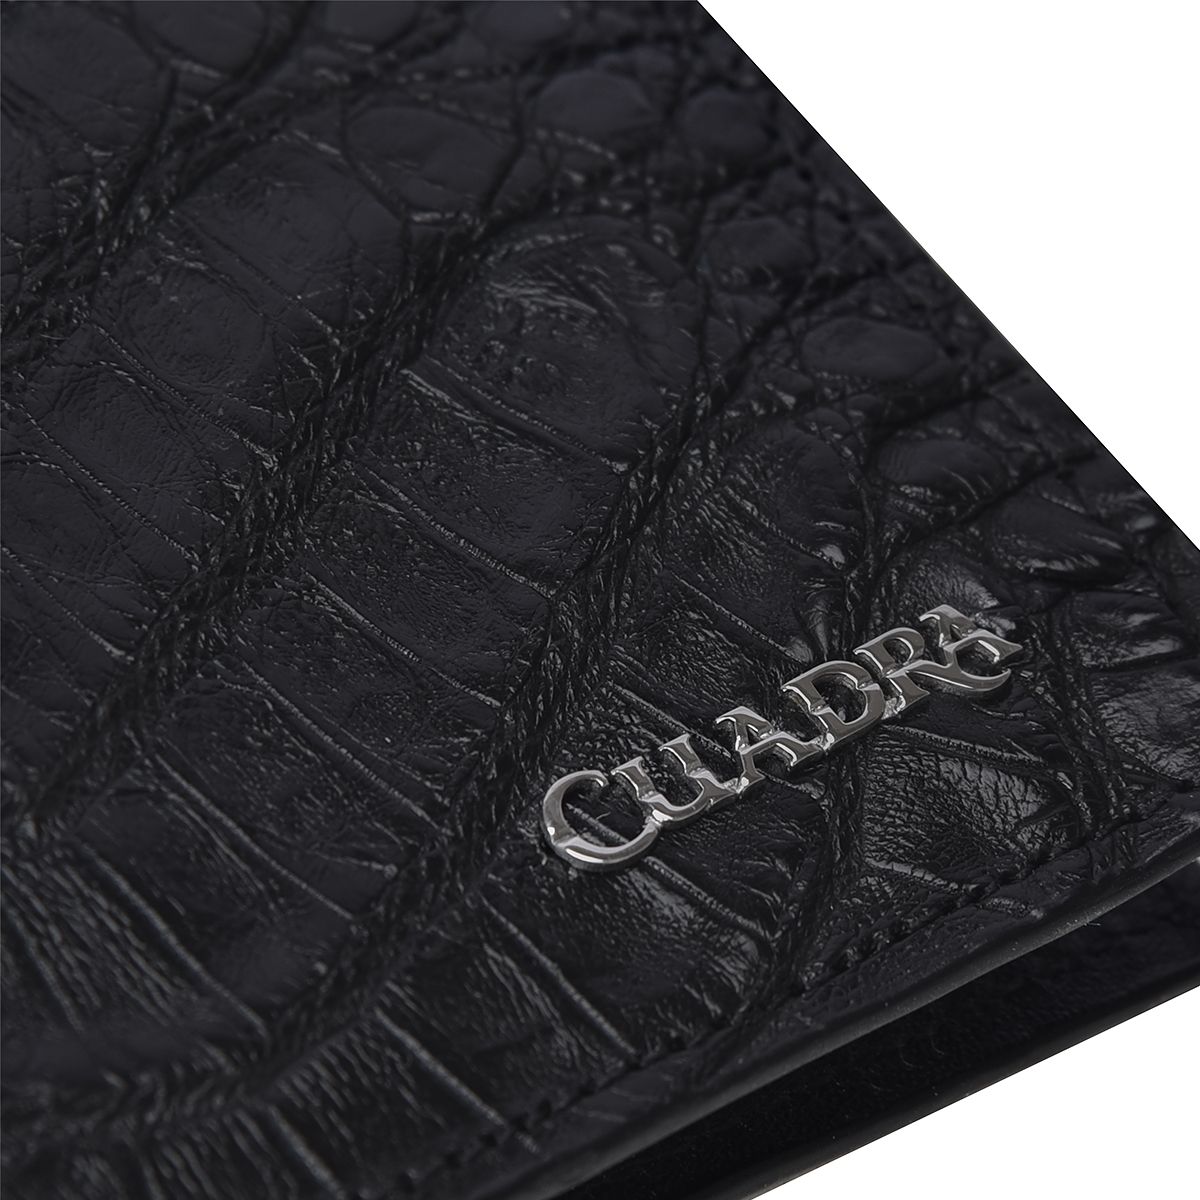 Honey leather bifold men's wallet - B3014TI - Cuadra Shop